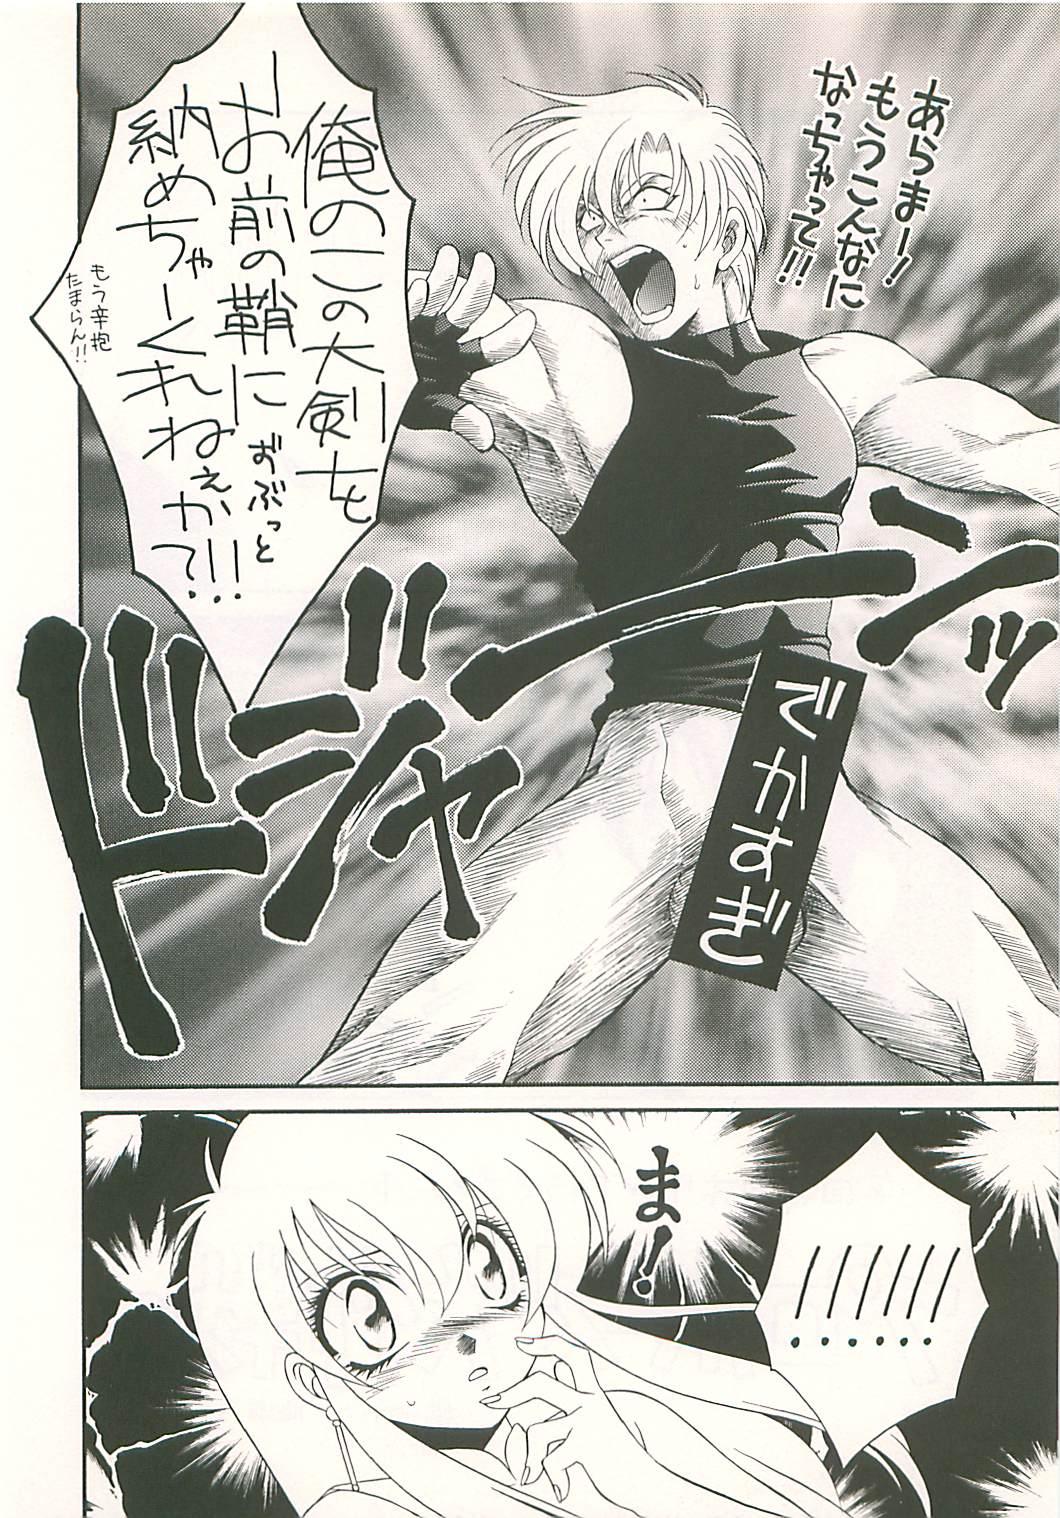 Blond Seisen no keifu 4 - Fire emblem seisen no keifu Inked - Page 6